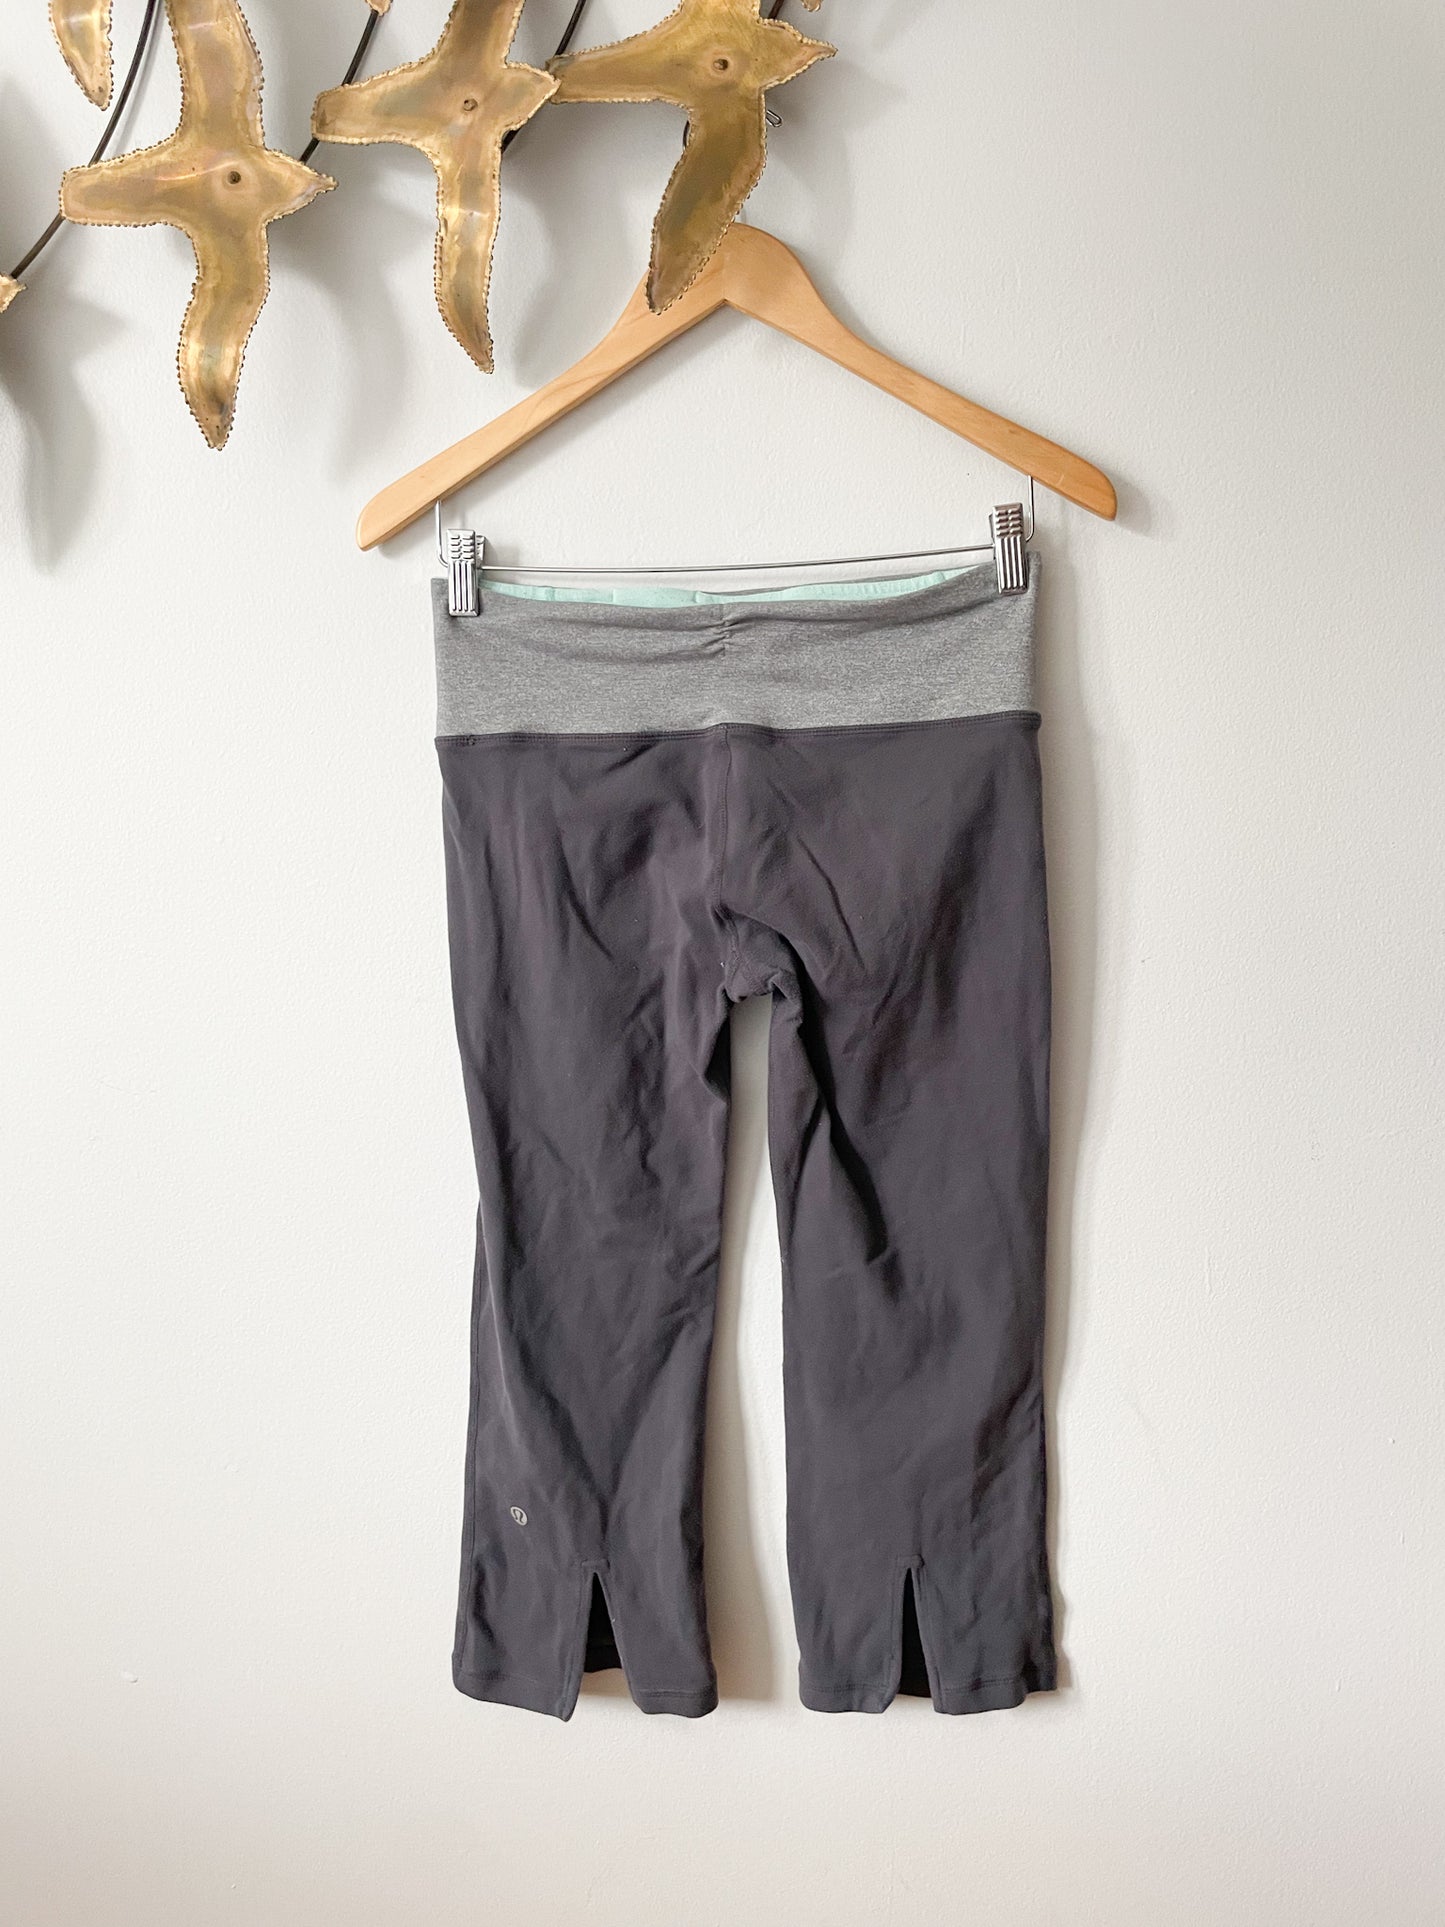 Lululemon Grey Two Toned Mid Rise Cropped Workout Straight Leg Capri Pants - Size 6